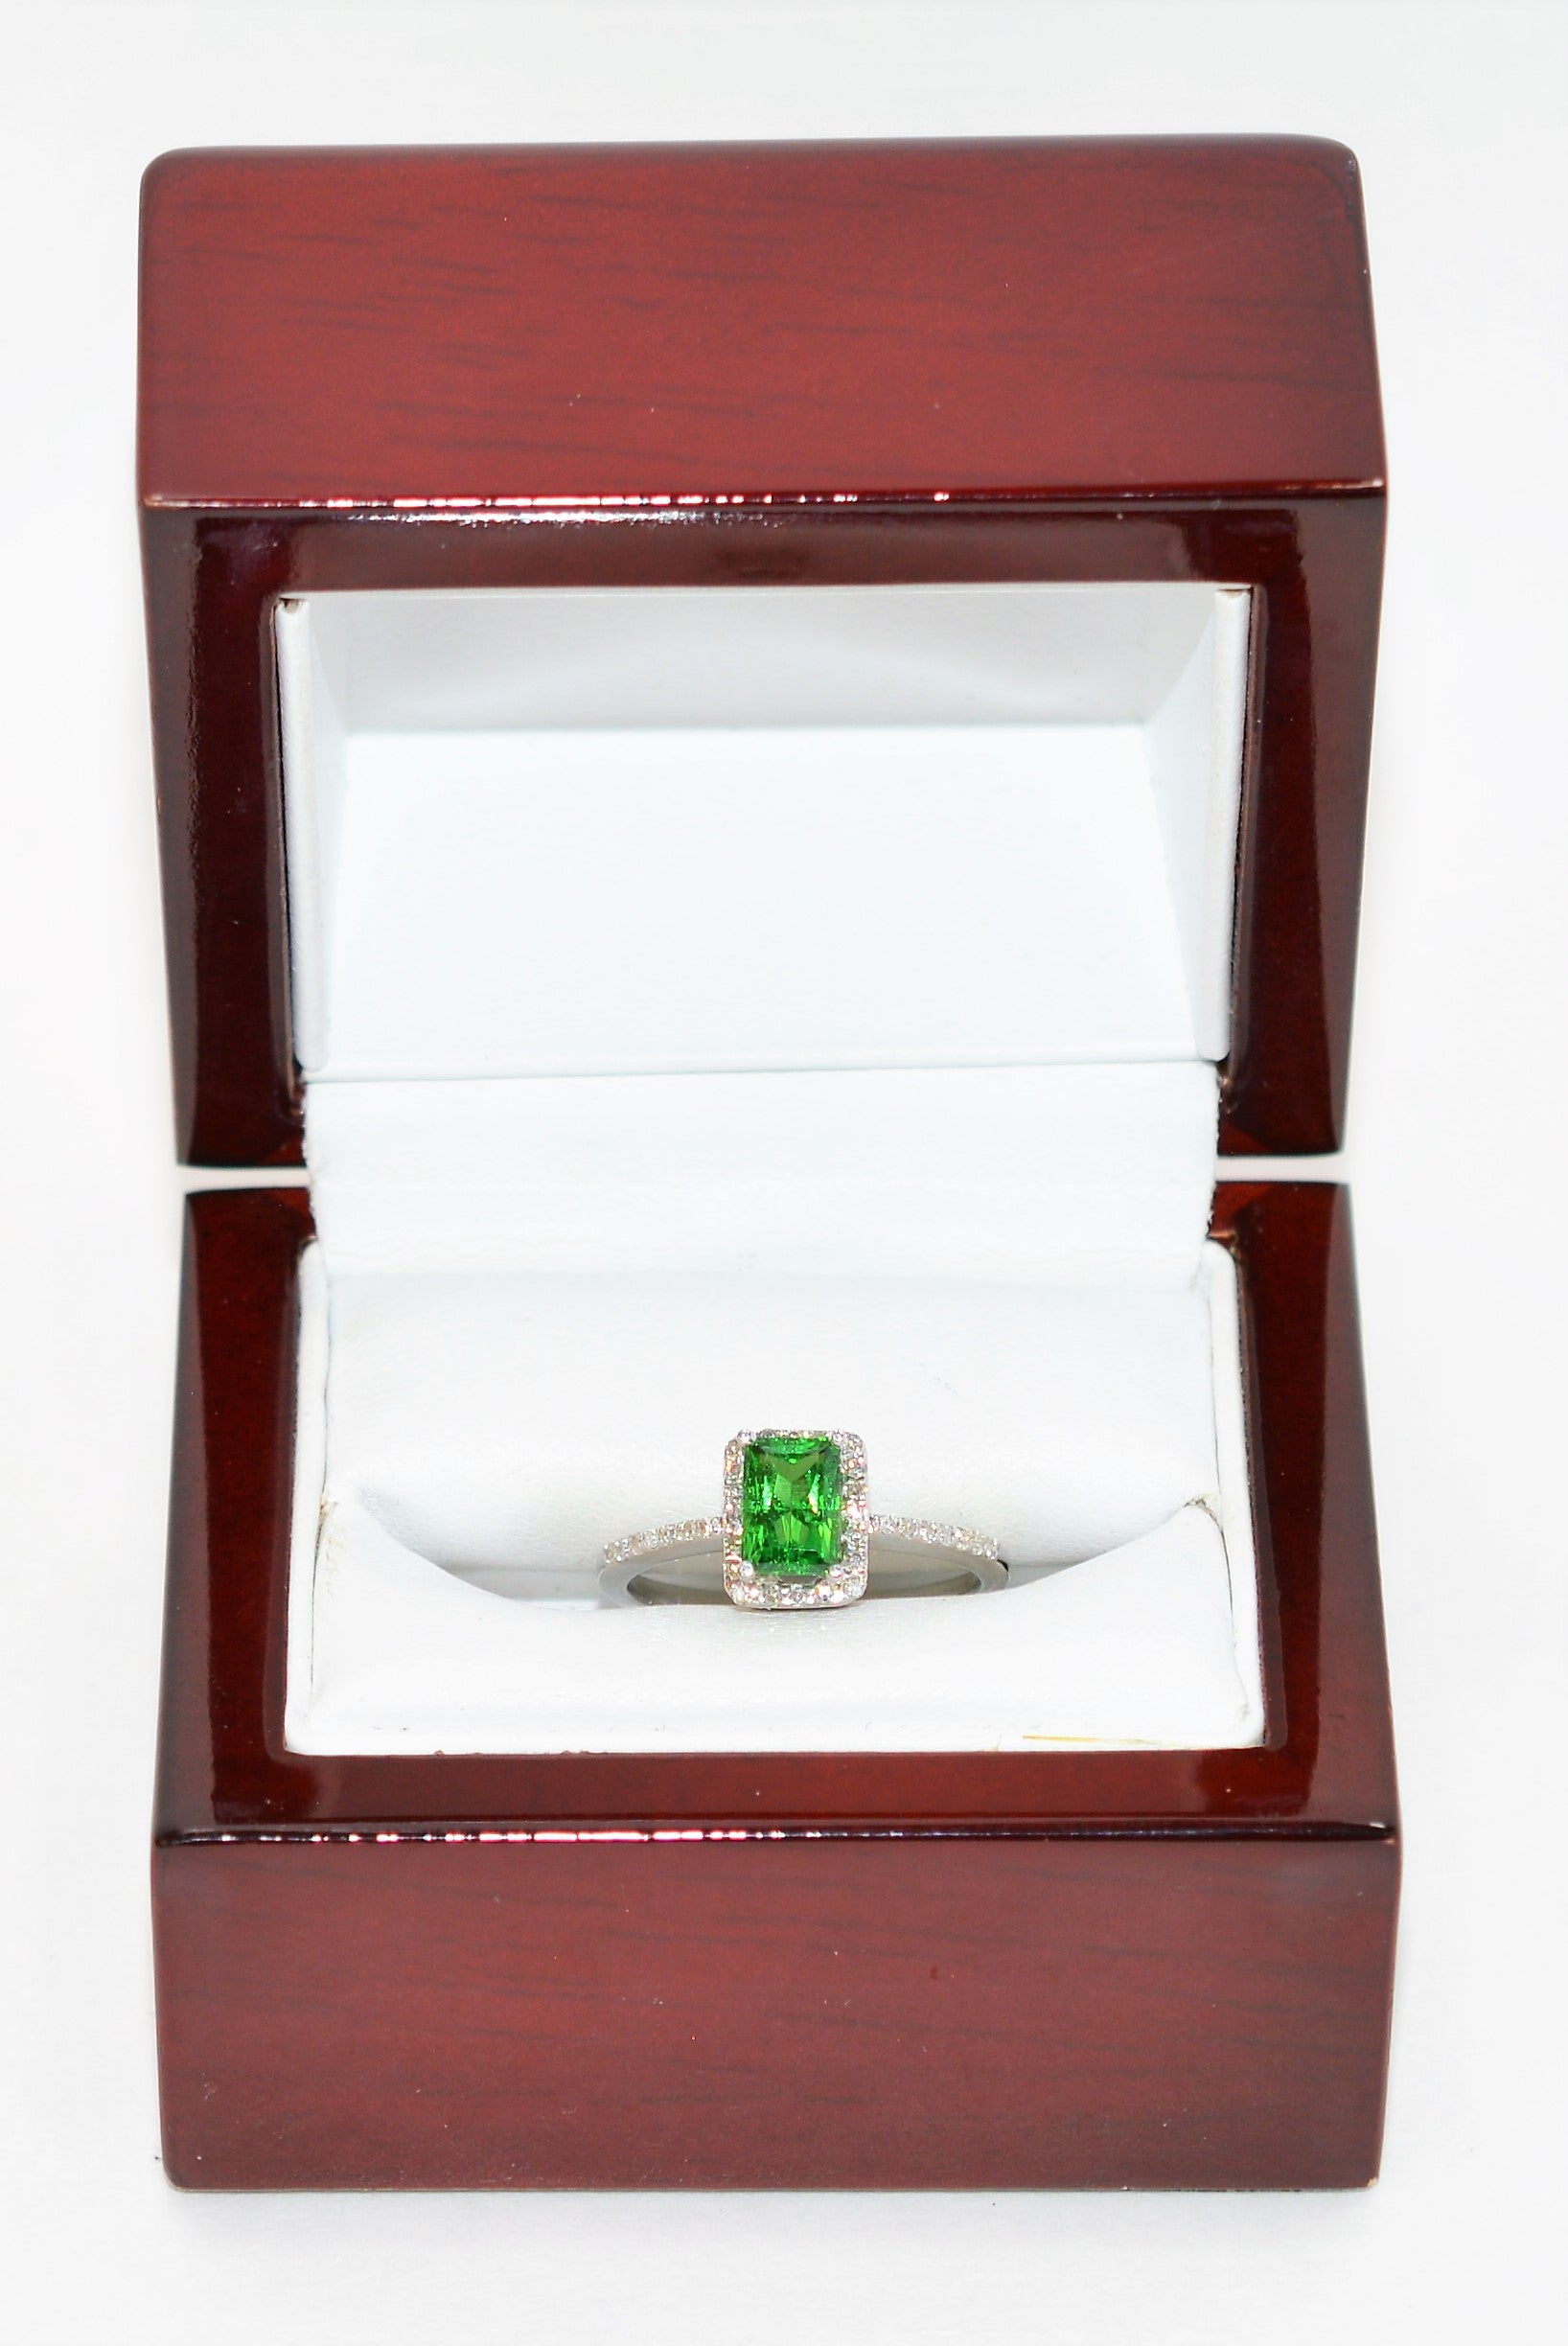 Natural Tsavorite Garnet & Diamond Ring 14K Solid White Gold 1.17tcw Engagement Ring Green Ring Wedding Ring Anniversary Ring Gemstone Ring Jewelry